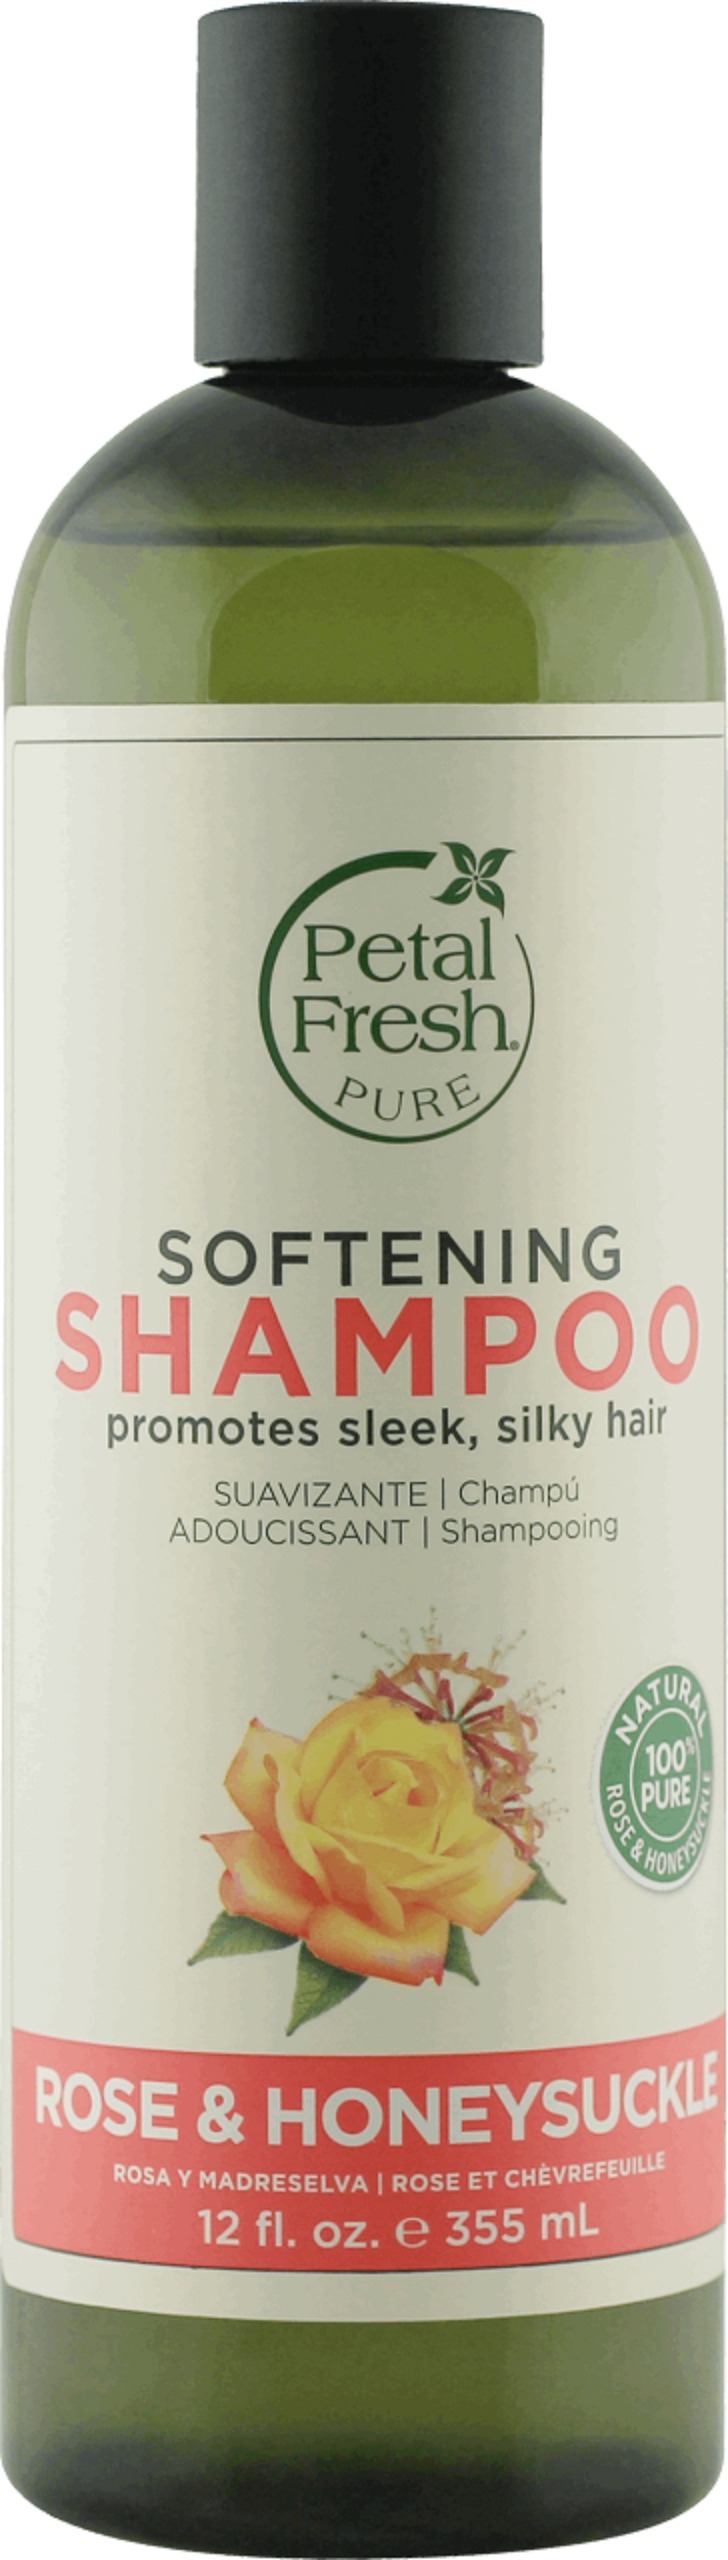 petal fresh szampon wizaz